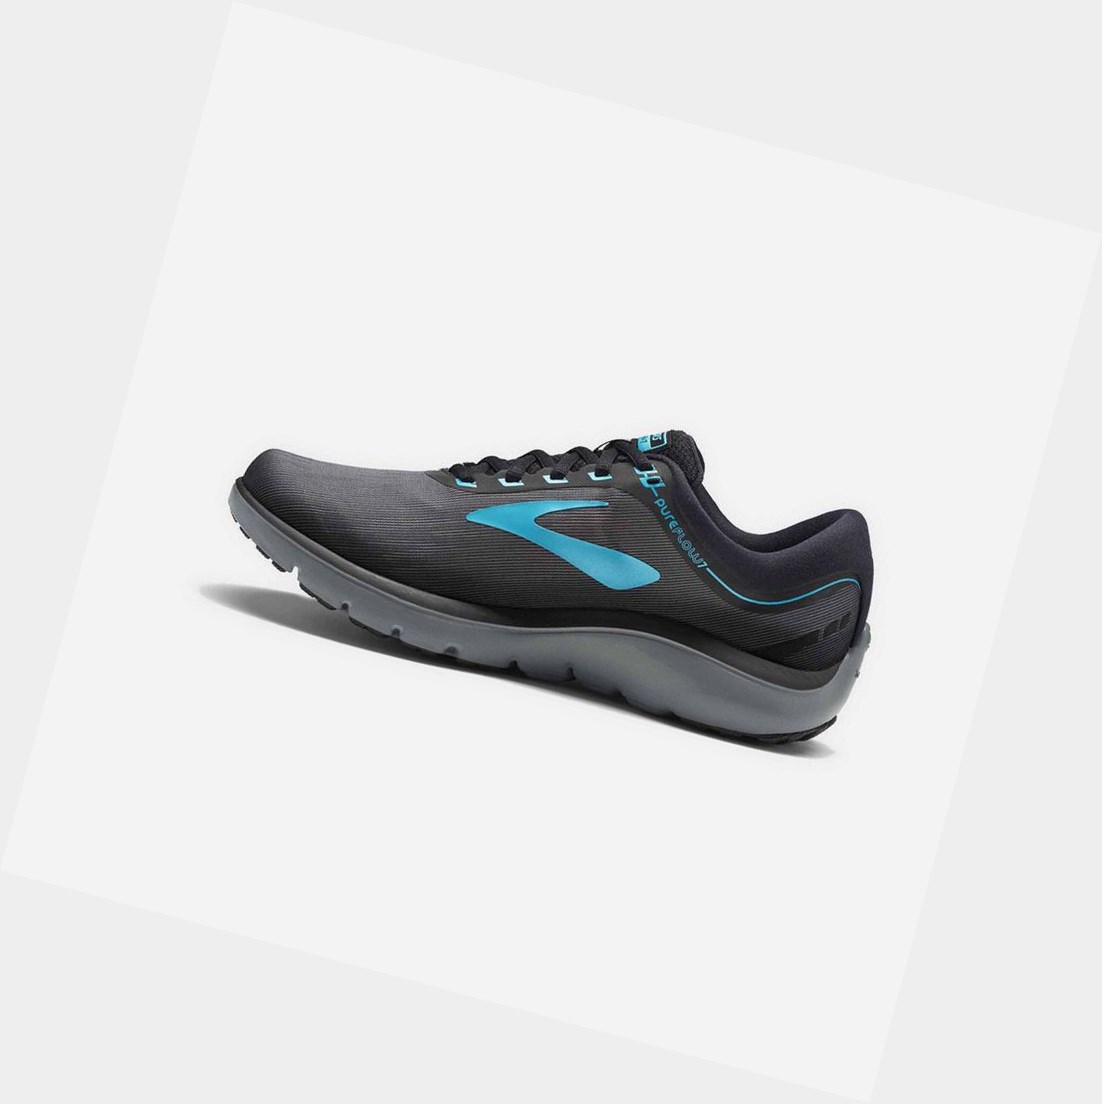 Brooks PureFlow 7 Women's Road Running Shoes Grey / Black / Green | KUOL-83905